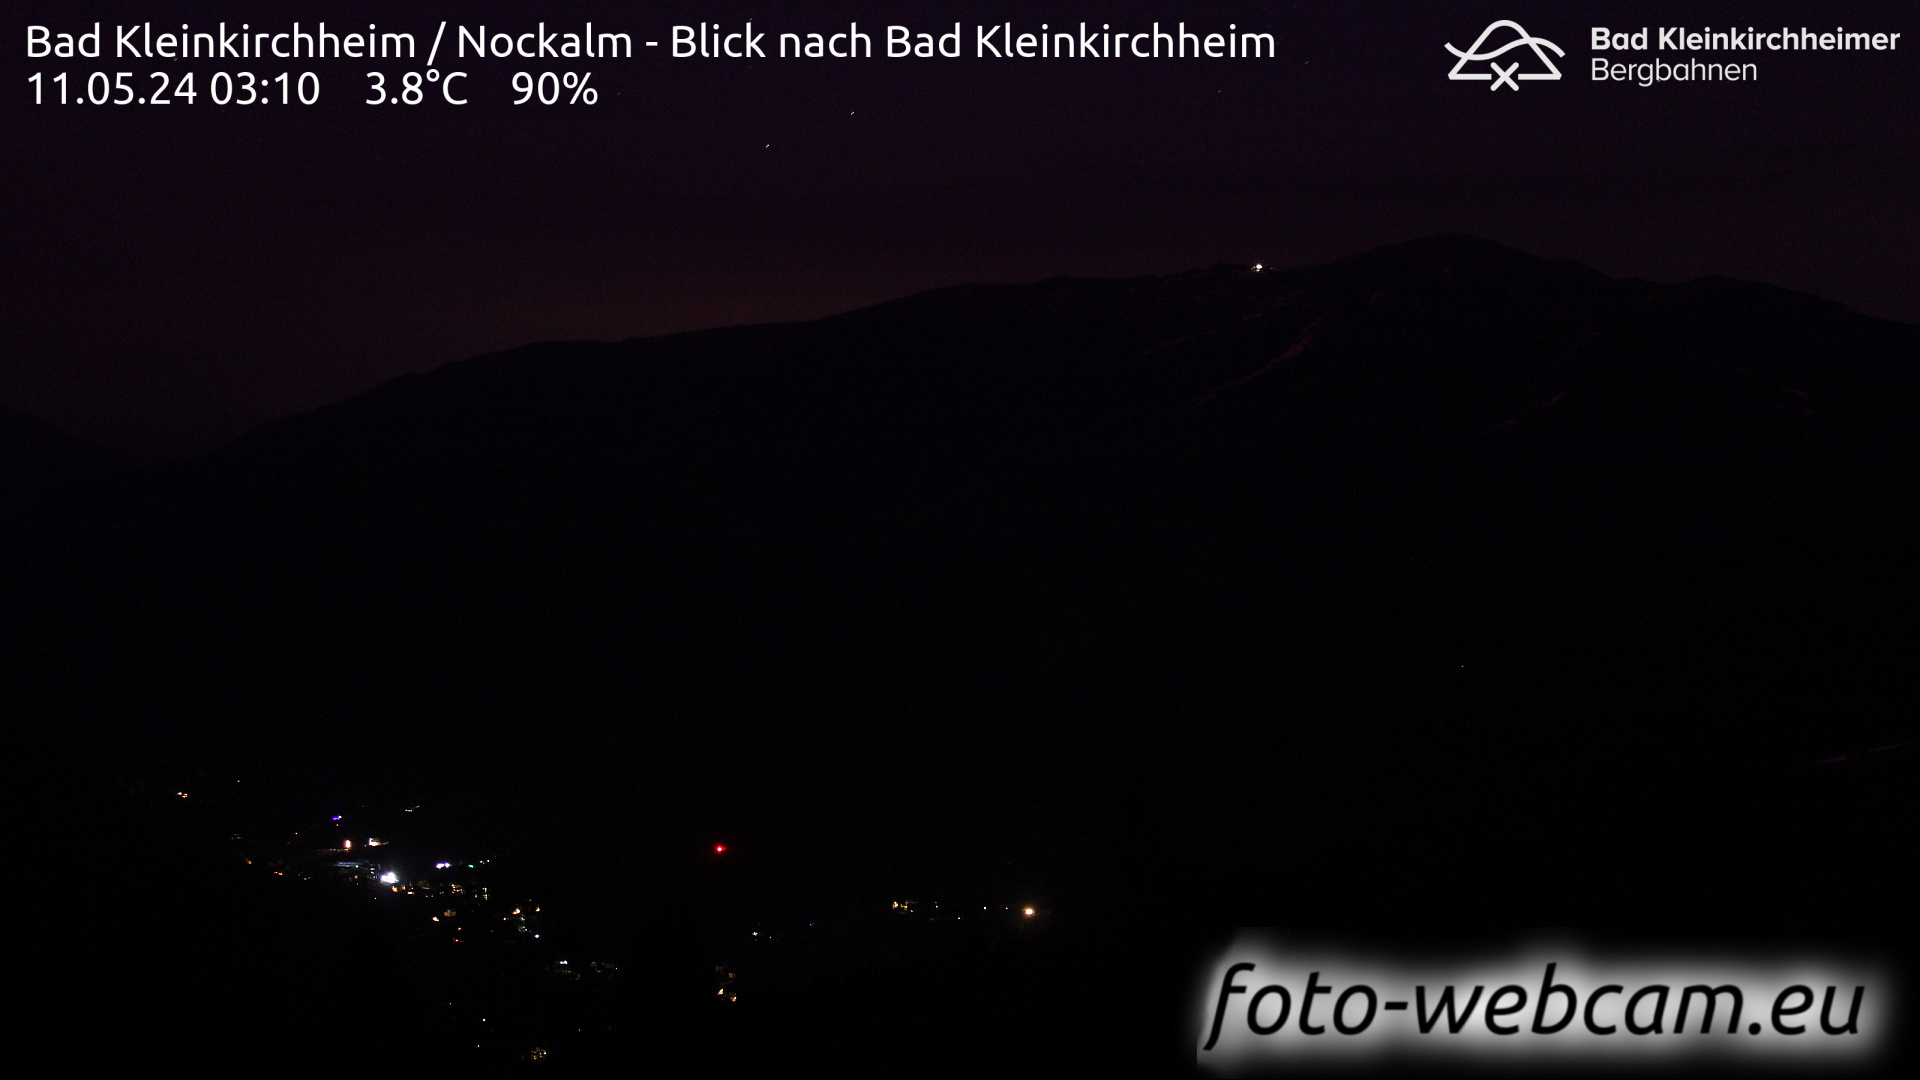 Bad Kleinkirchheim Thu. 03:17